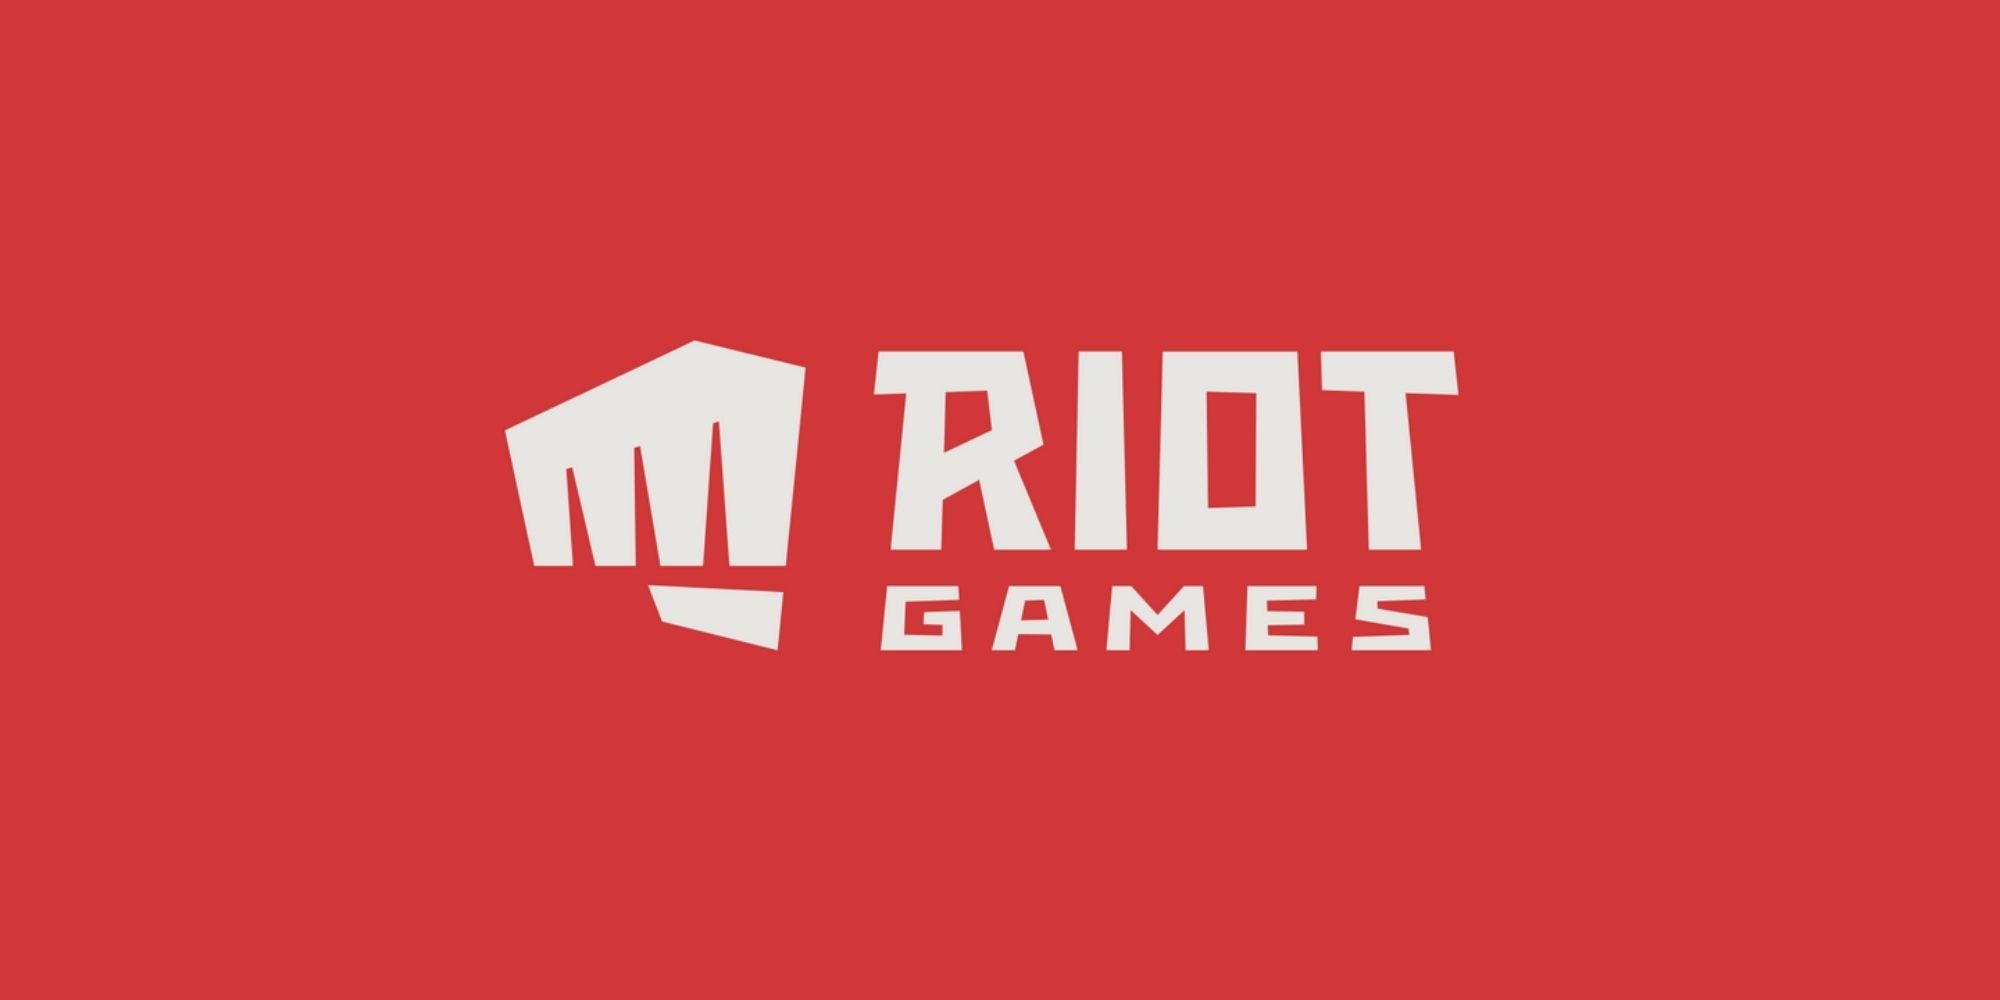 riot-games-logo